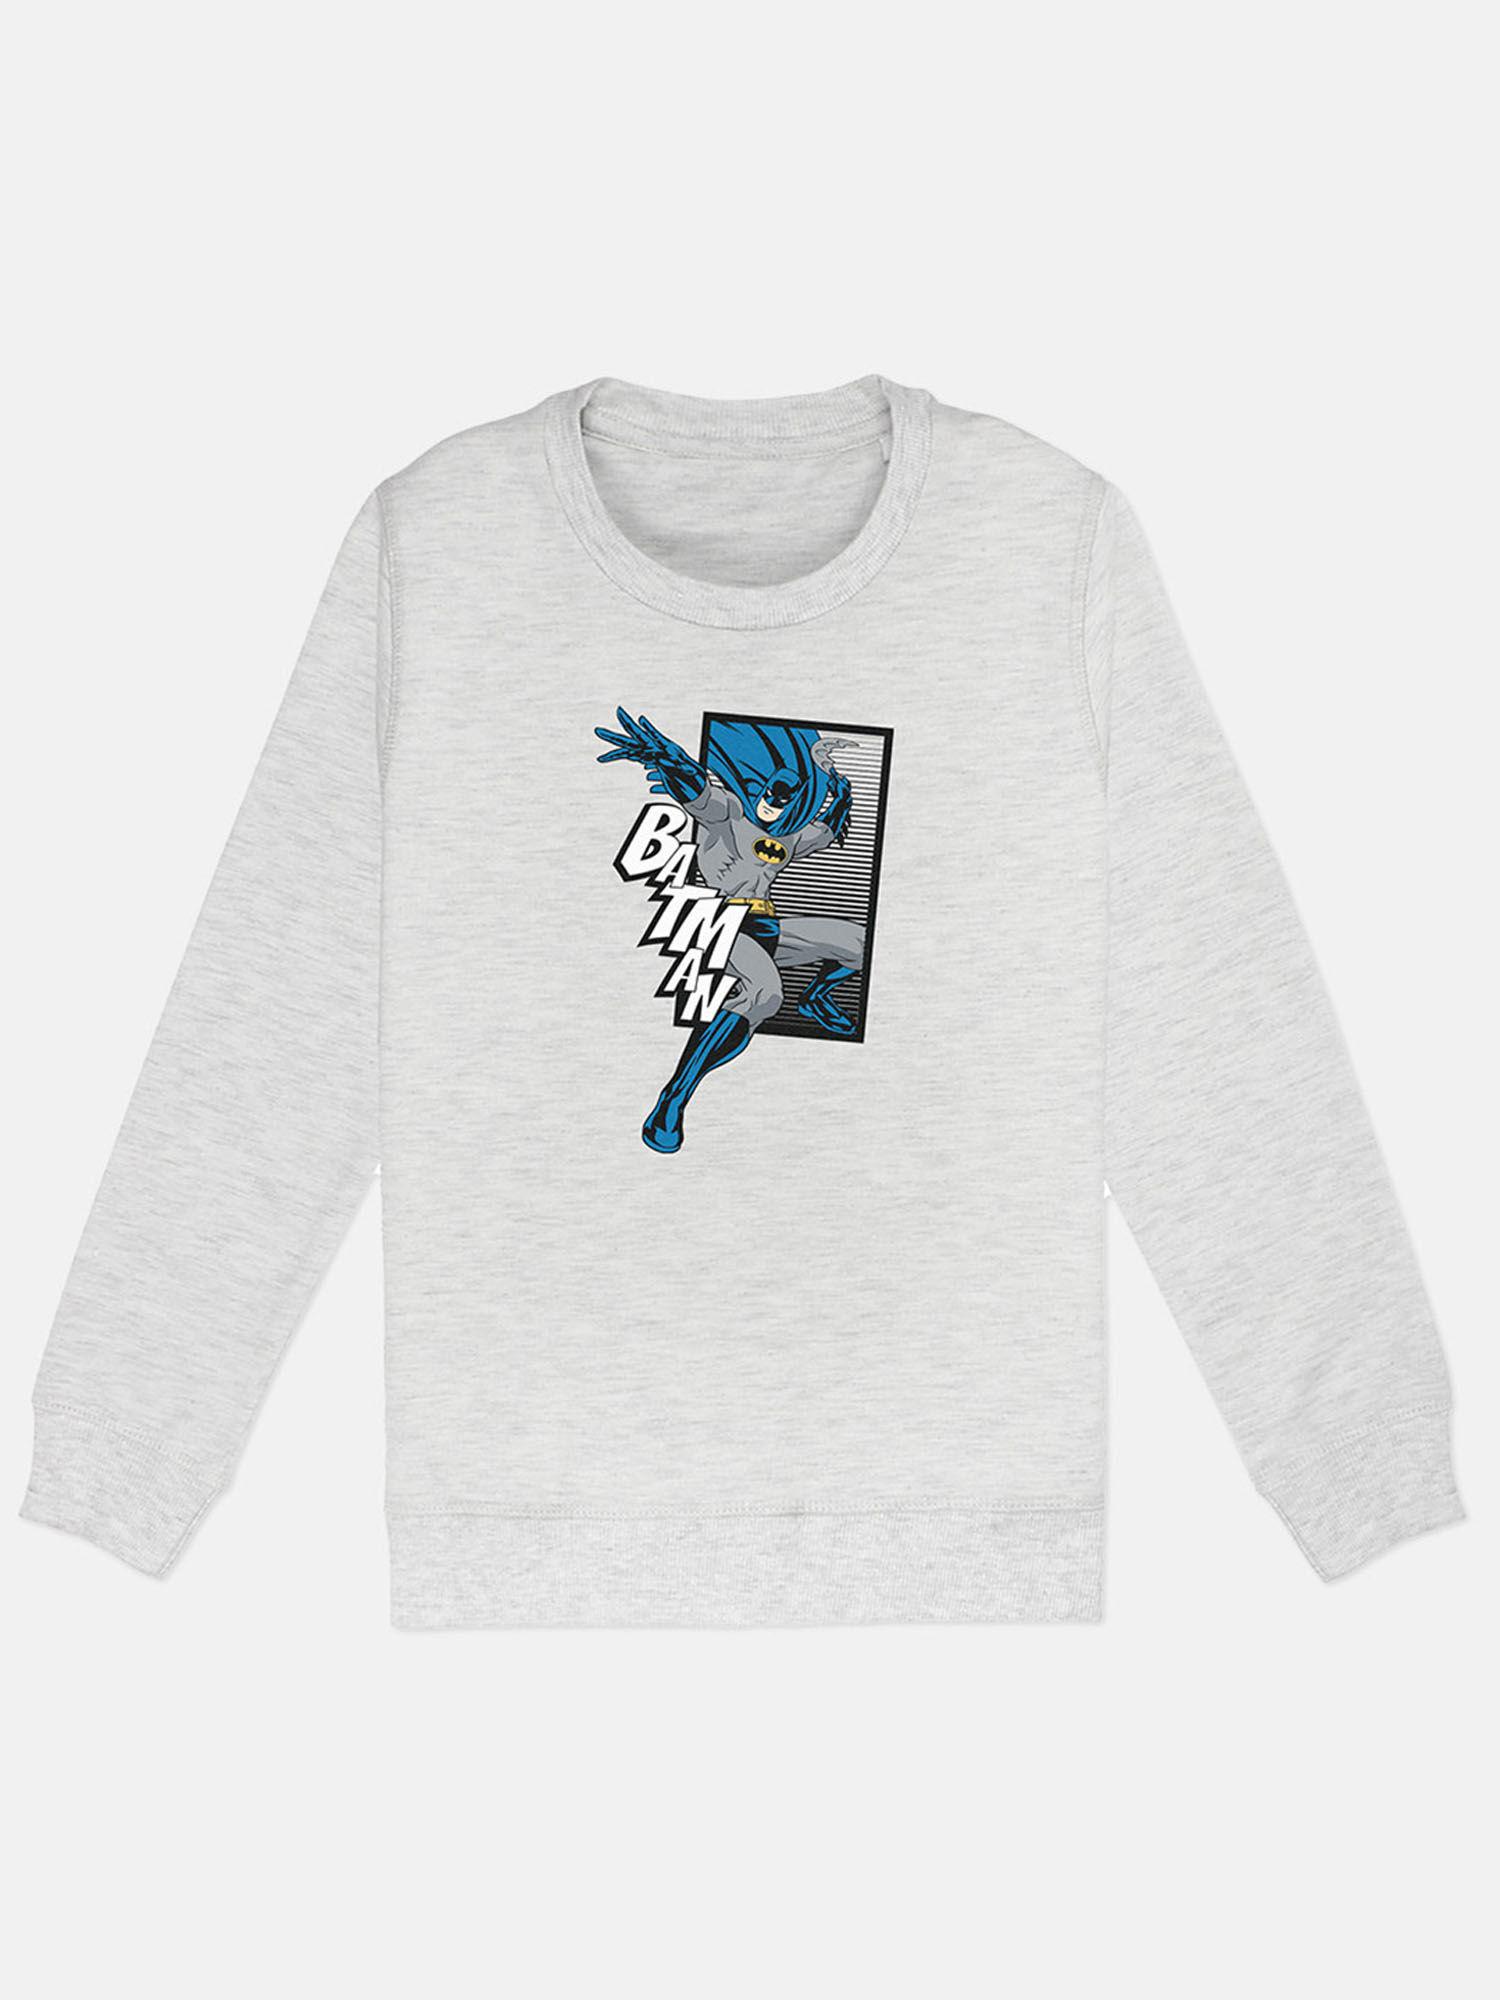 batman printed grey full sleeve sweater